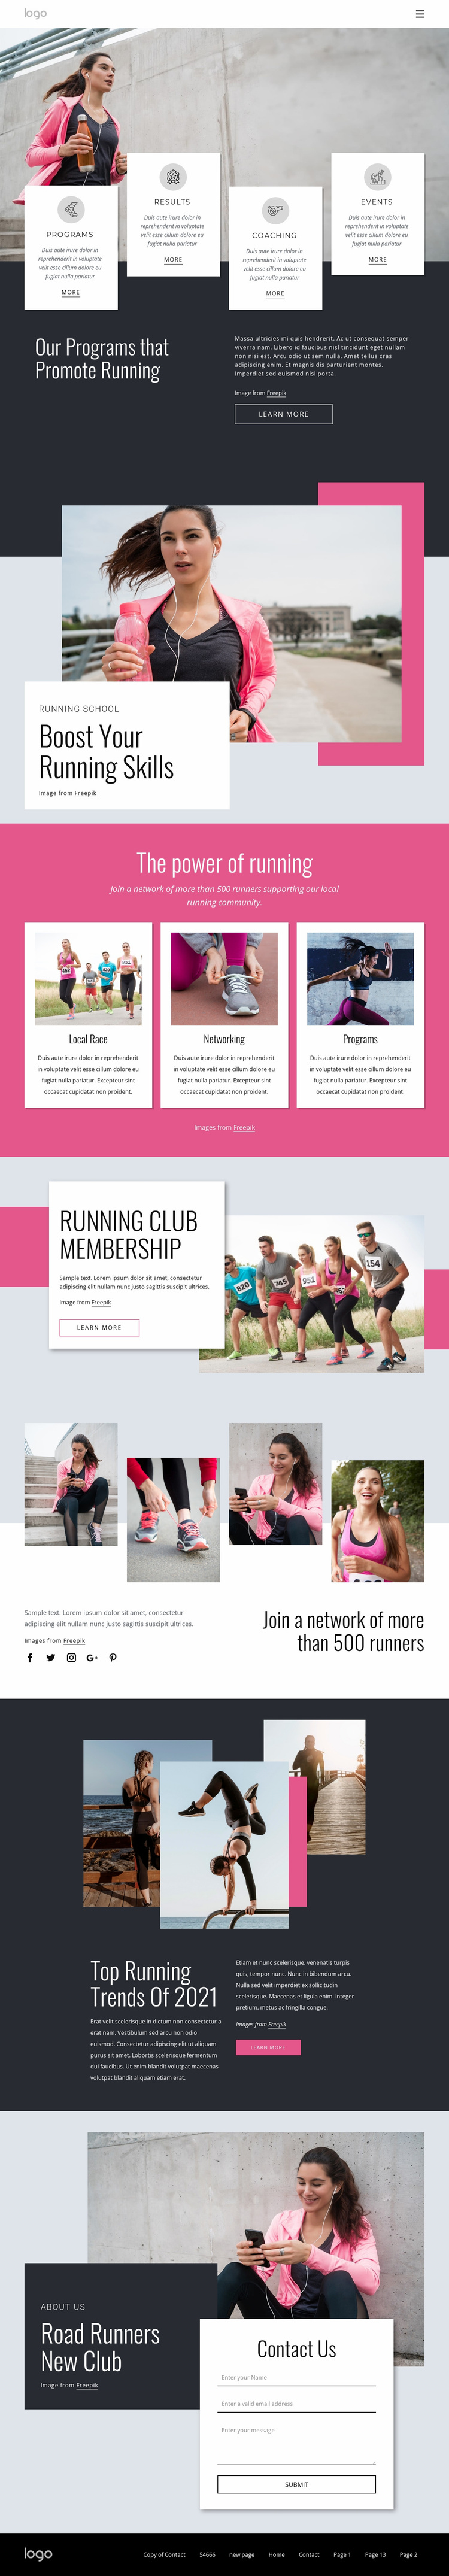 Running and walking community Website Design